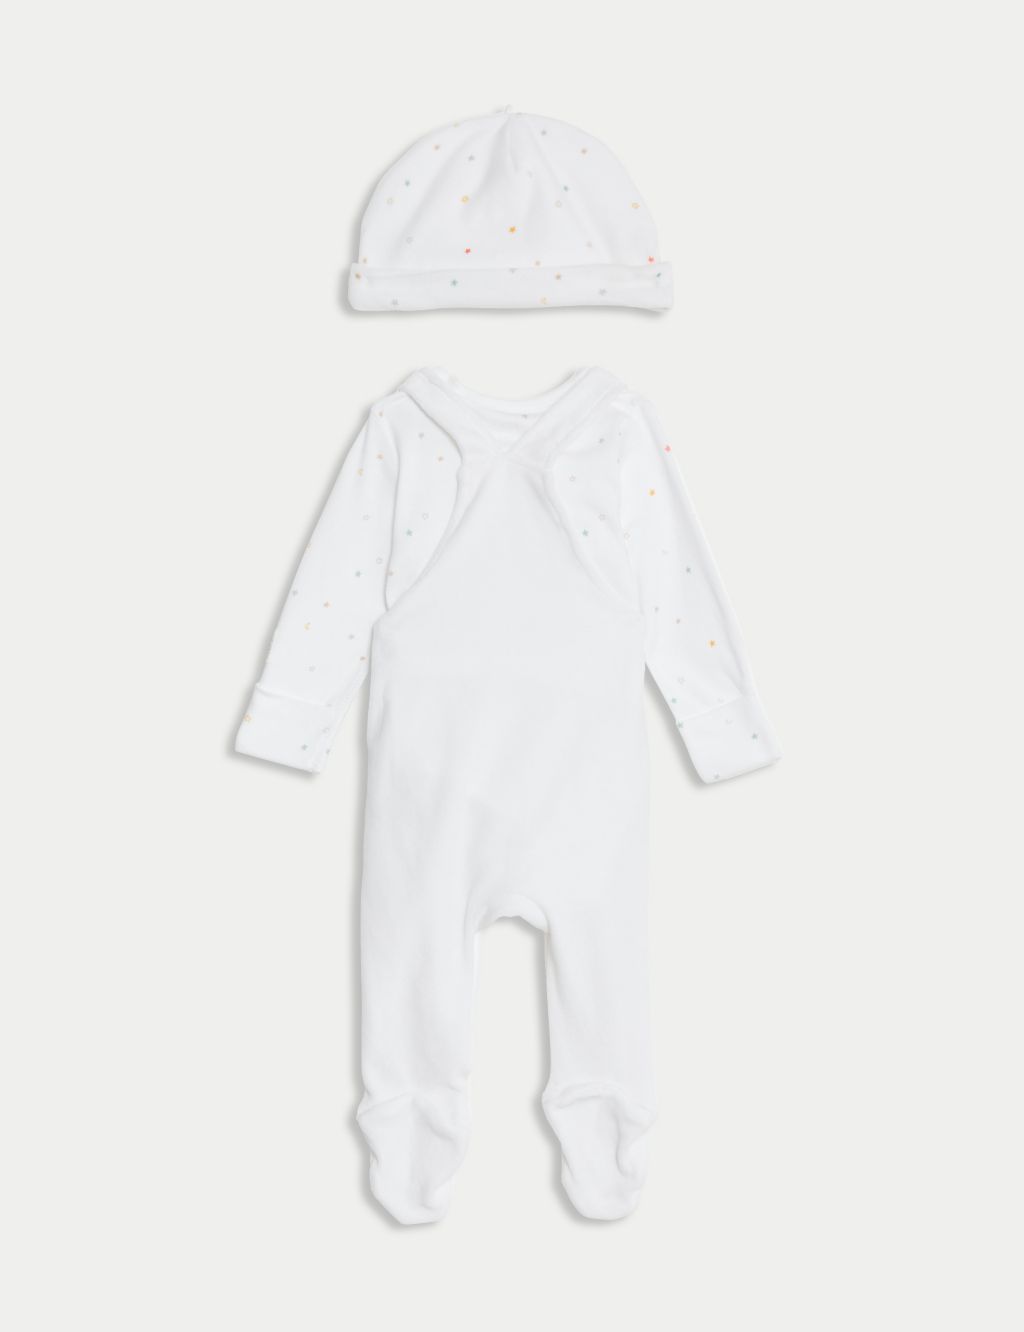 Unisex Baby Clothes | M&S